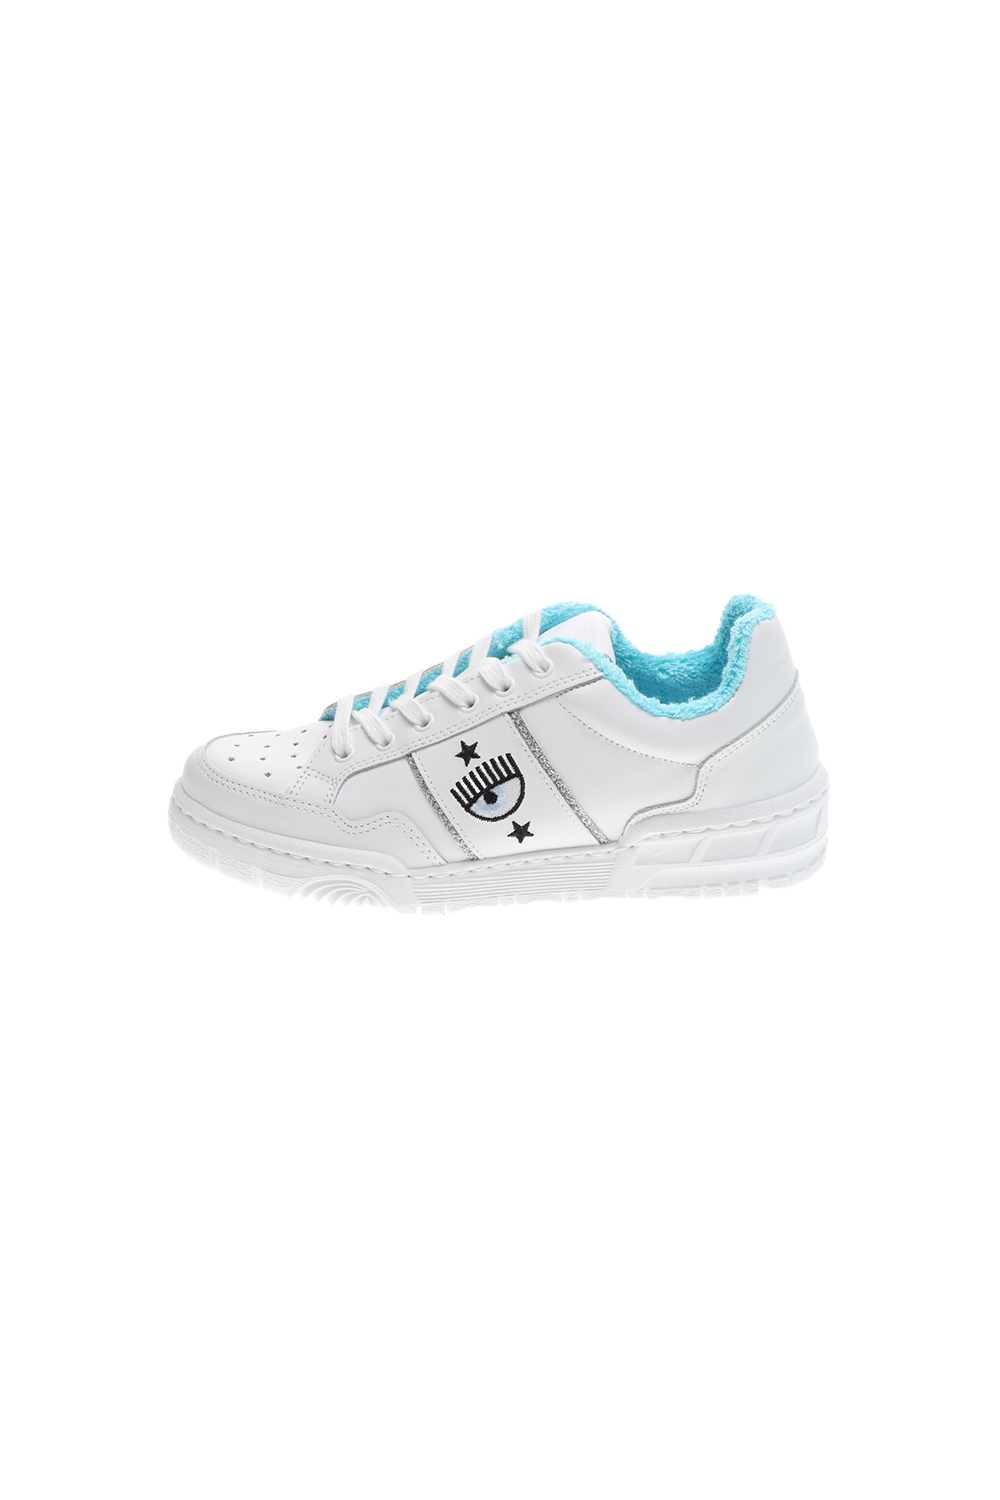 CHIARRA FERRAGNI - Γυναικεία sneakers CHIARRA FERRAGNI CF2830-009 λευκά Γυναικεία/Παπούτσια/Sneakers